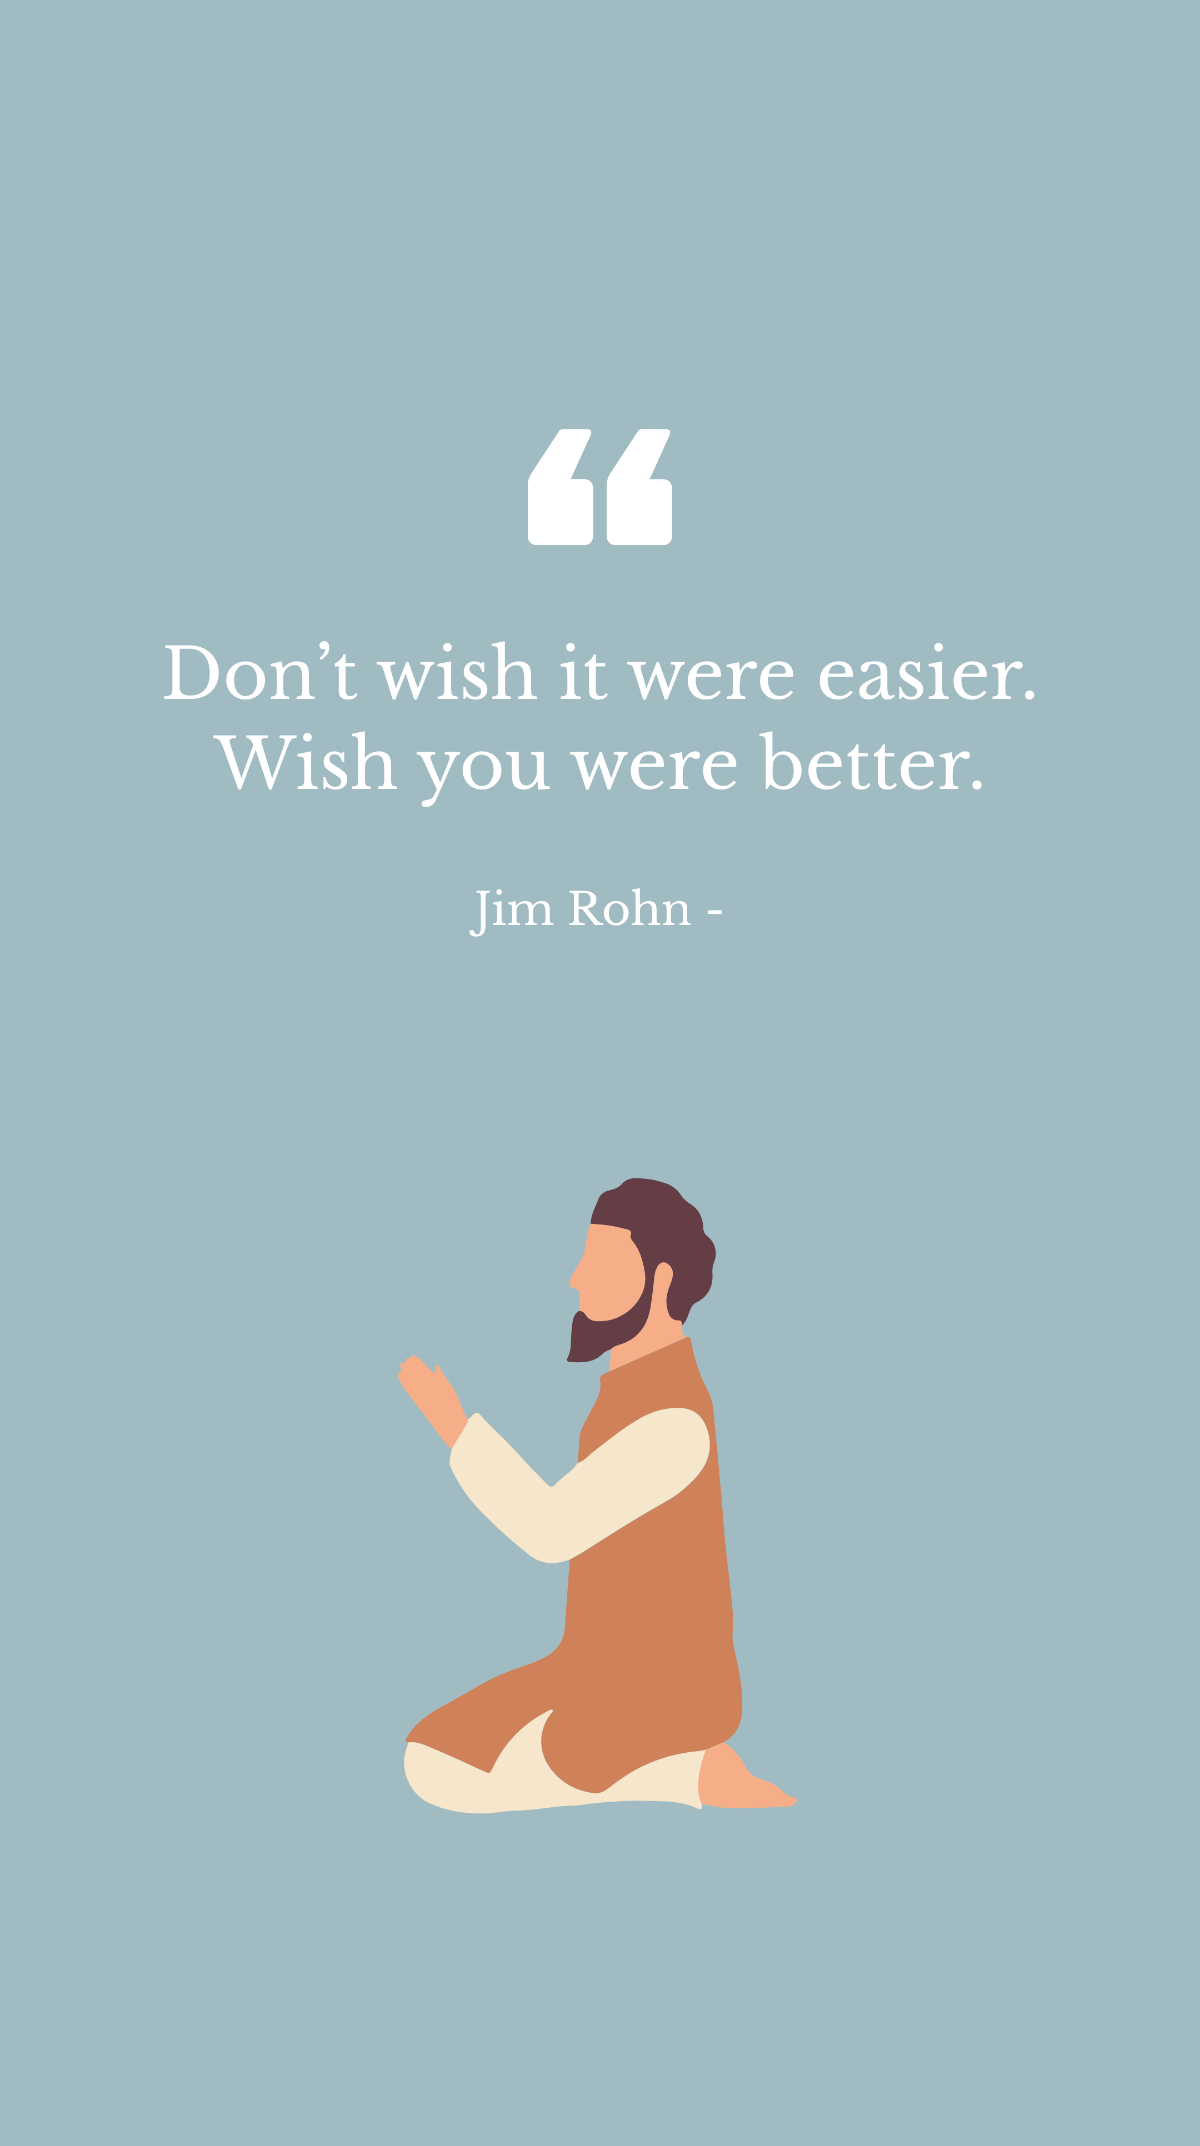 Jim Rohn - Don’t wish it were easier. Wish you were better.